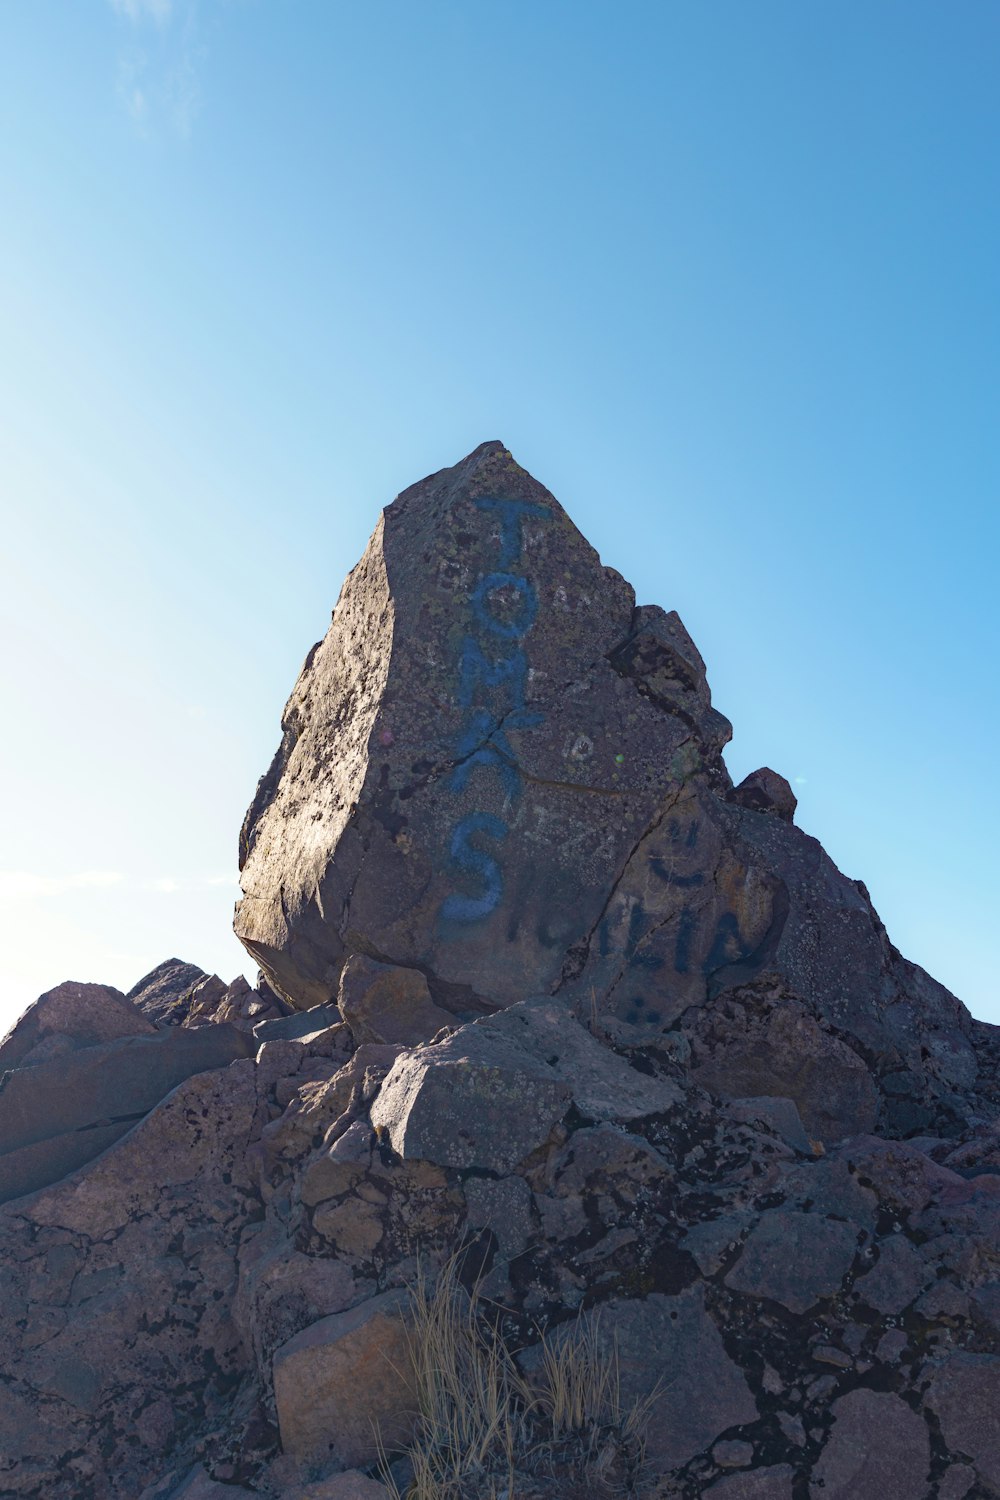 a large rock with graffiti written on it